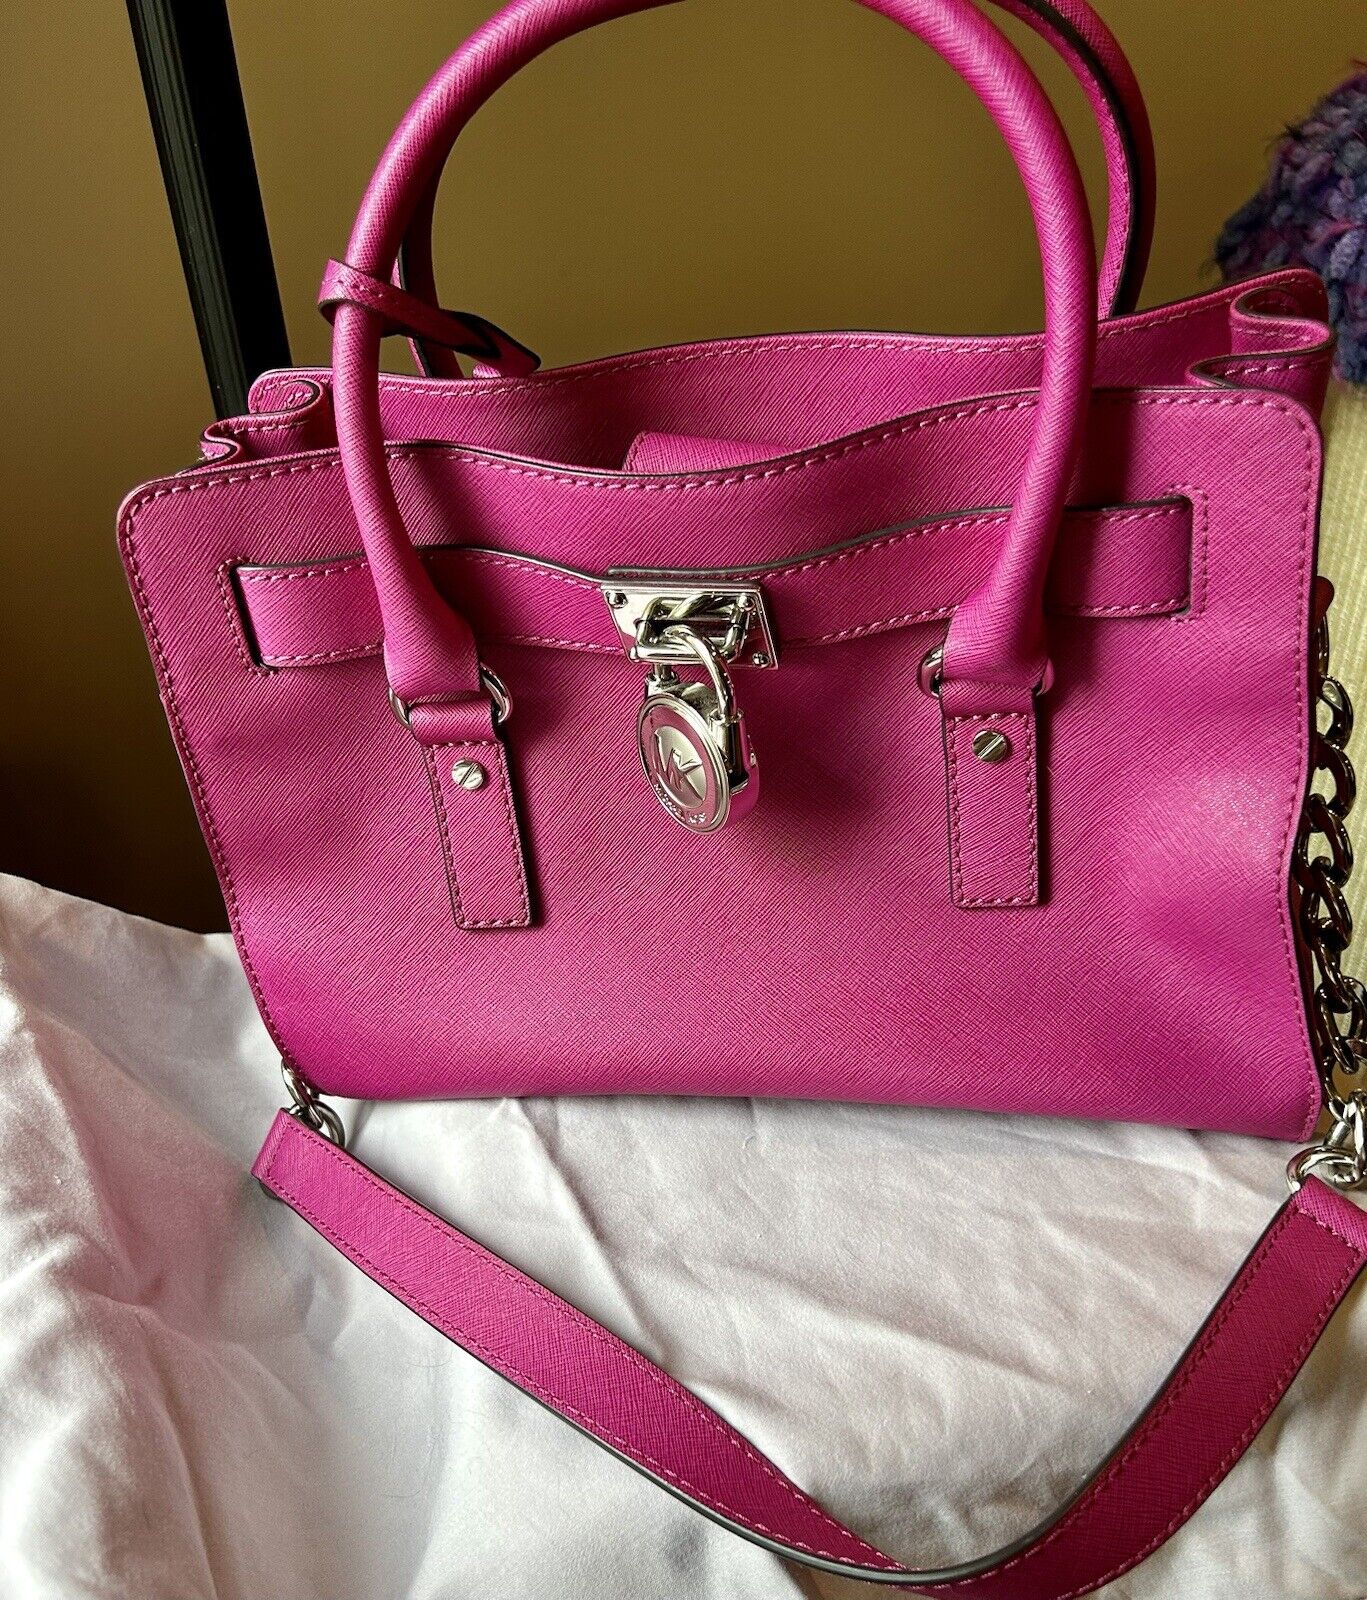 michael kors large hamilton handbag. Hot Pink. Authentic. Chain